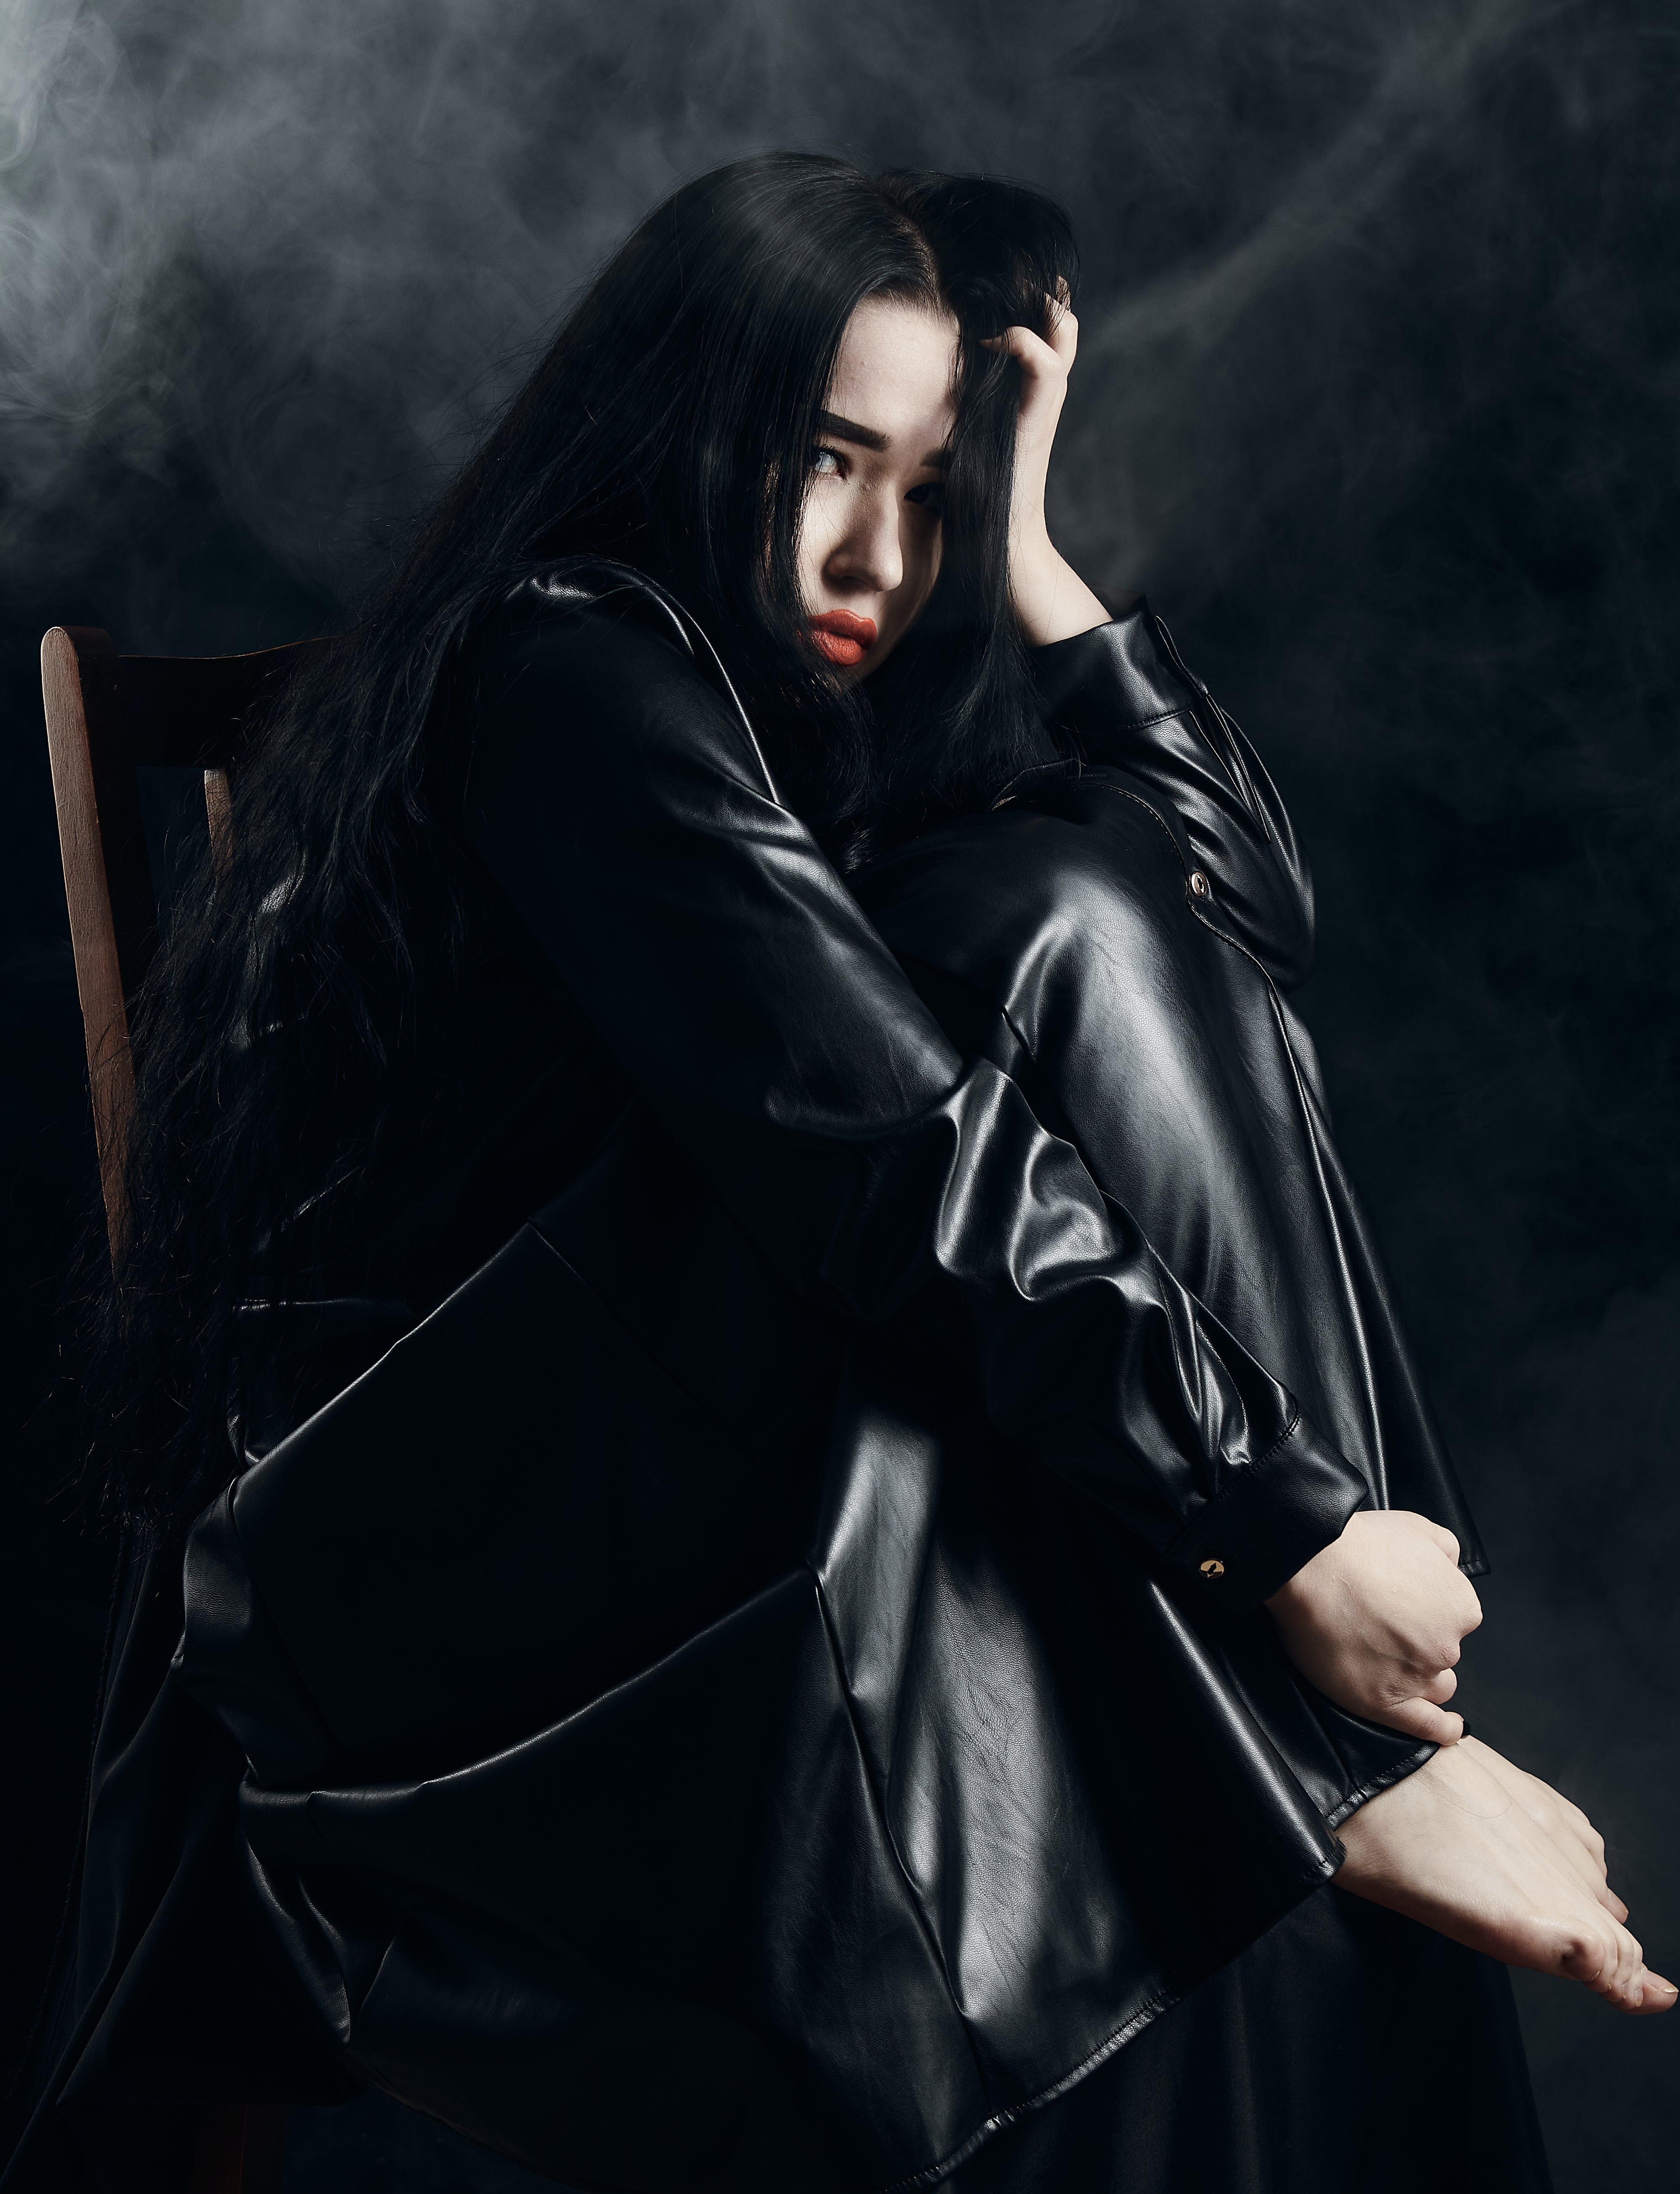 A woman dressed in black. | Source: Pexels